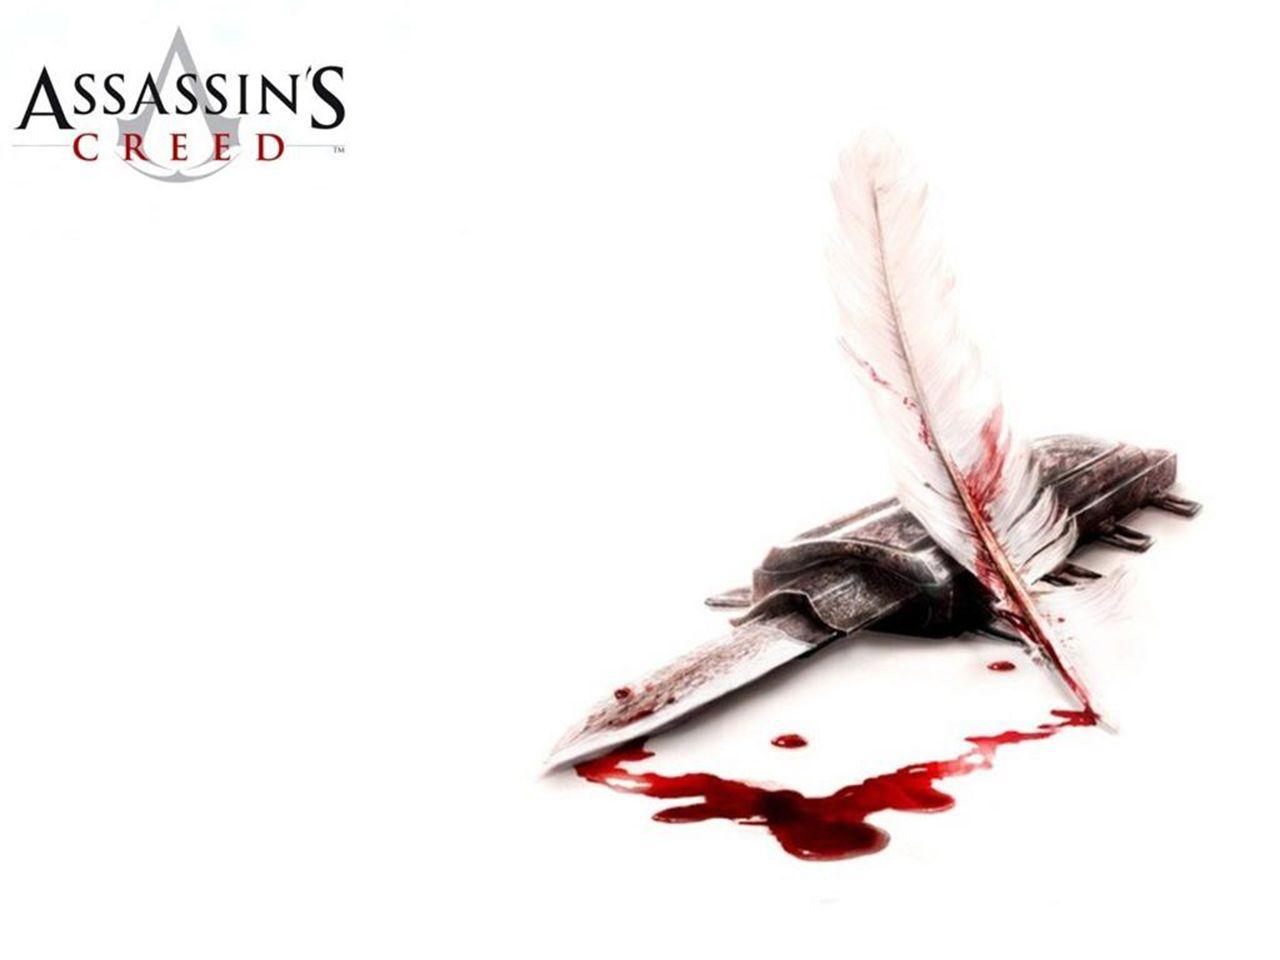 Assassins Creed HD Wallpaper. Assassin's Creed